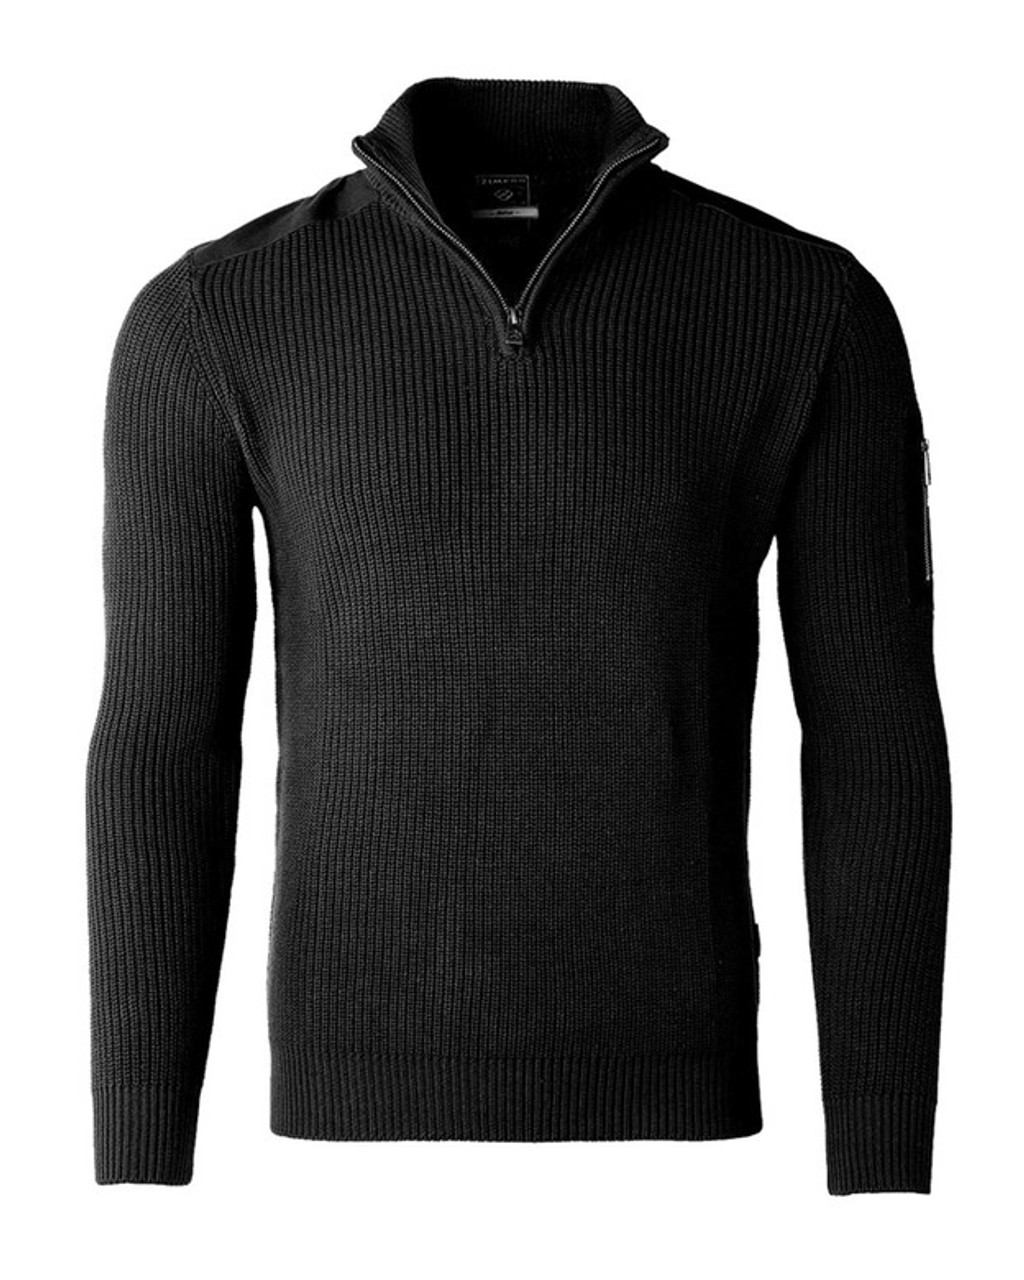 Mens Cotton Quarter Zip Up Mock Turtle Neck Sweater - Black